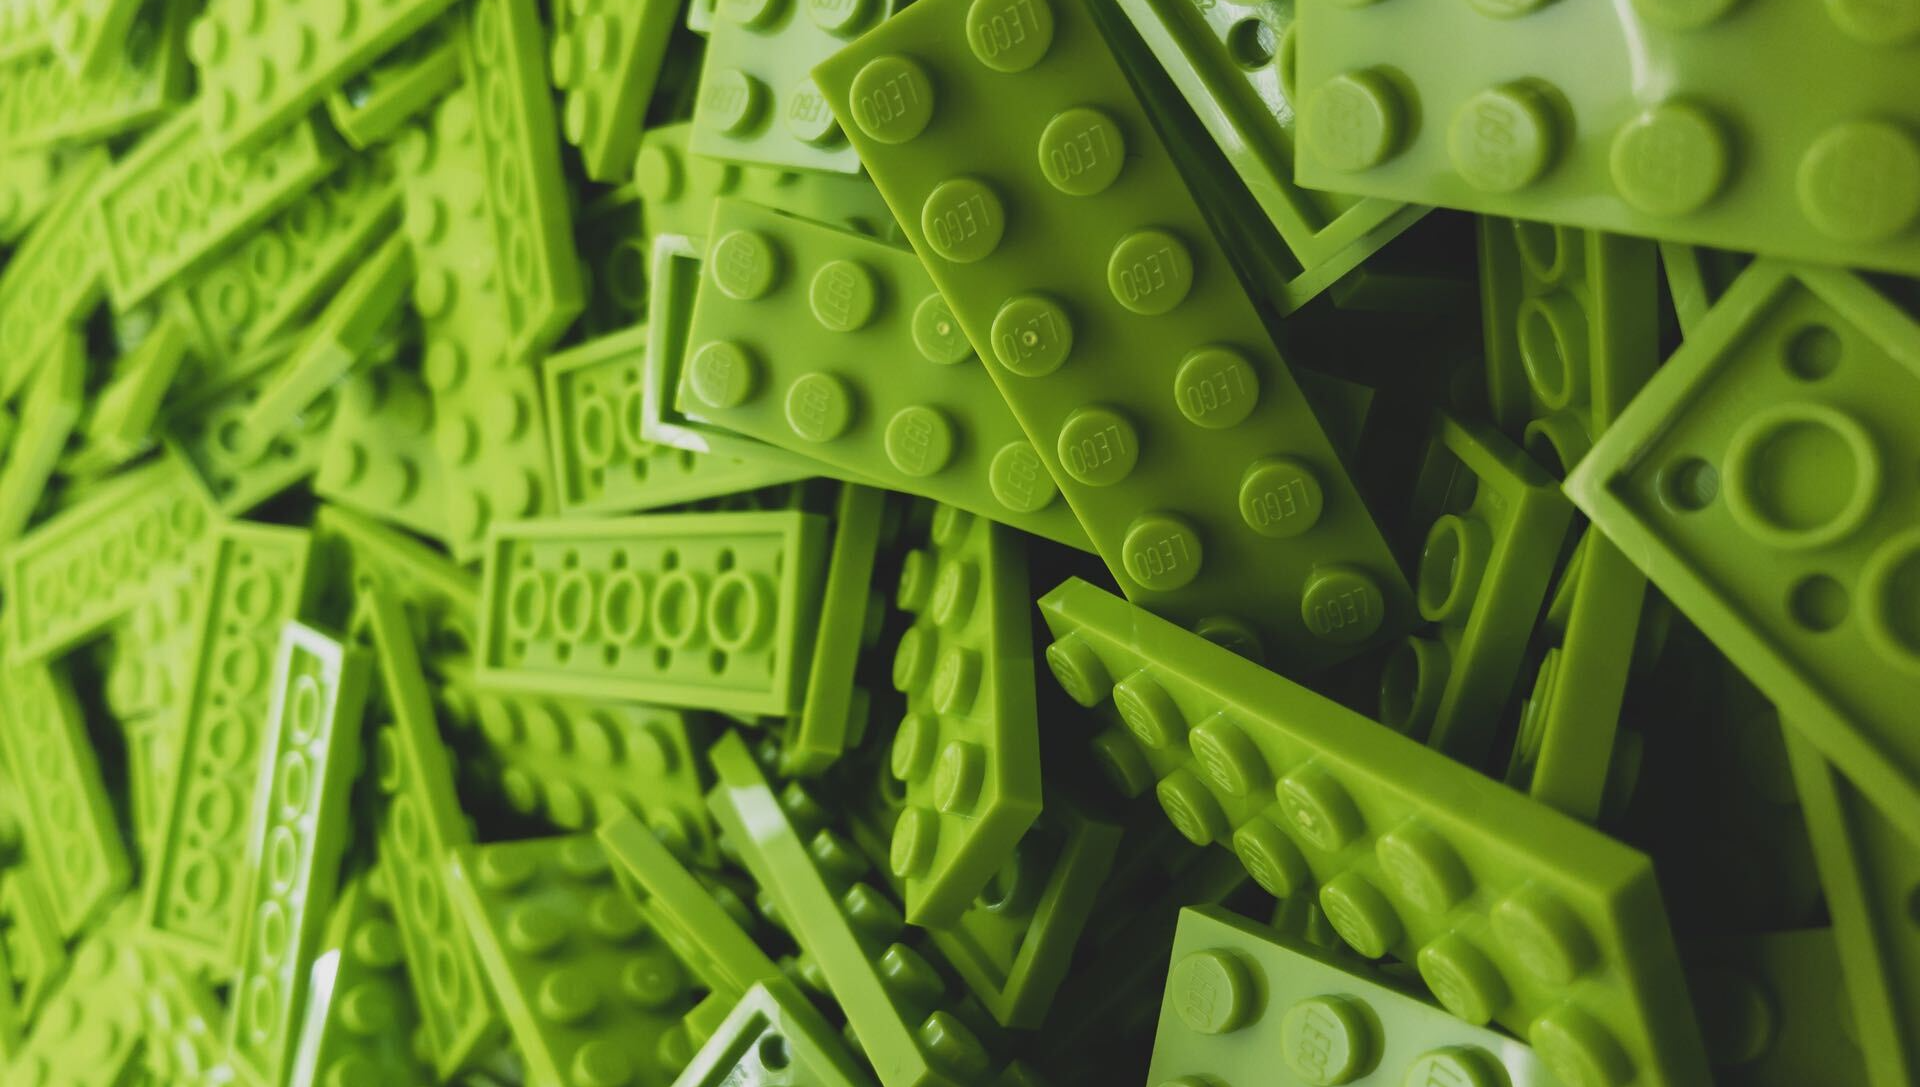 Green lego bricks